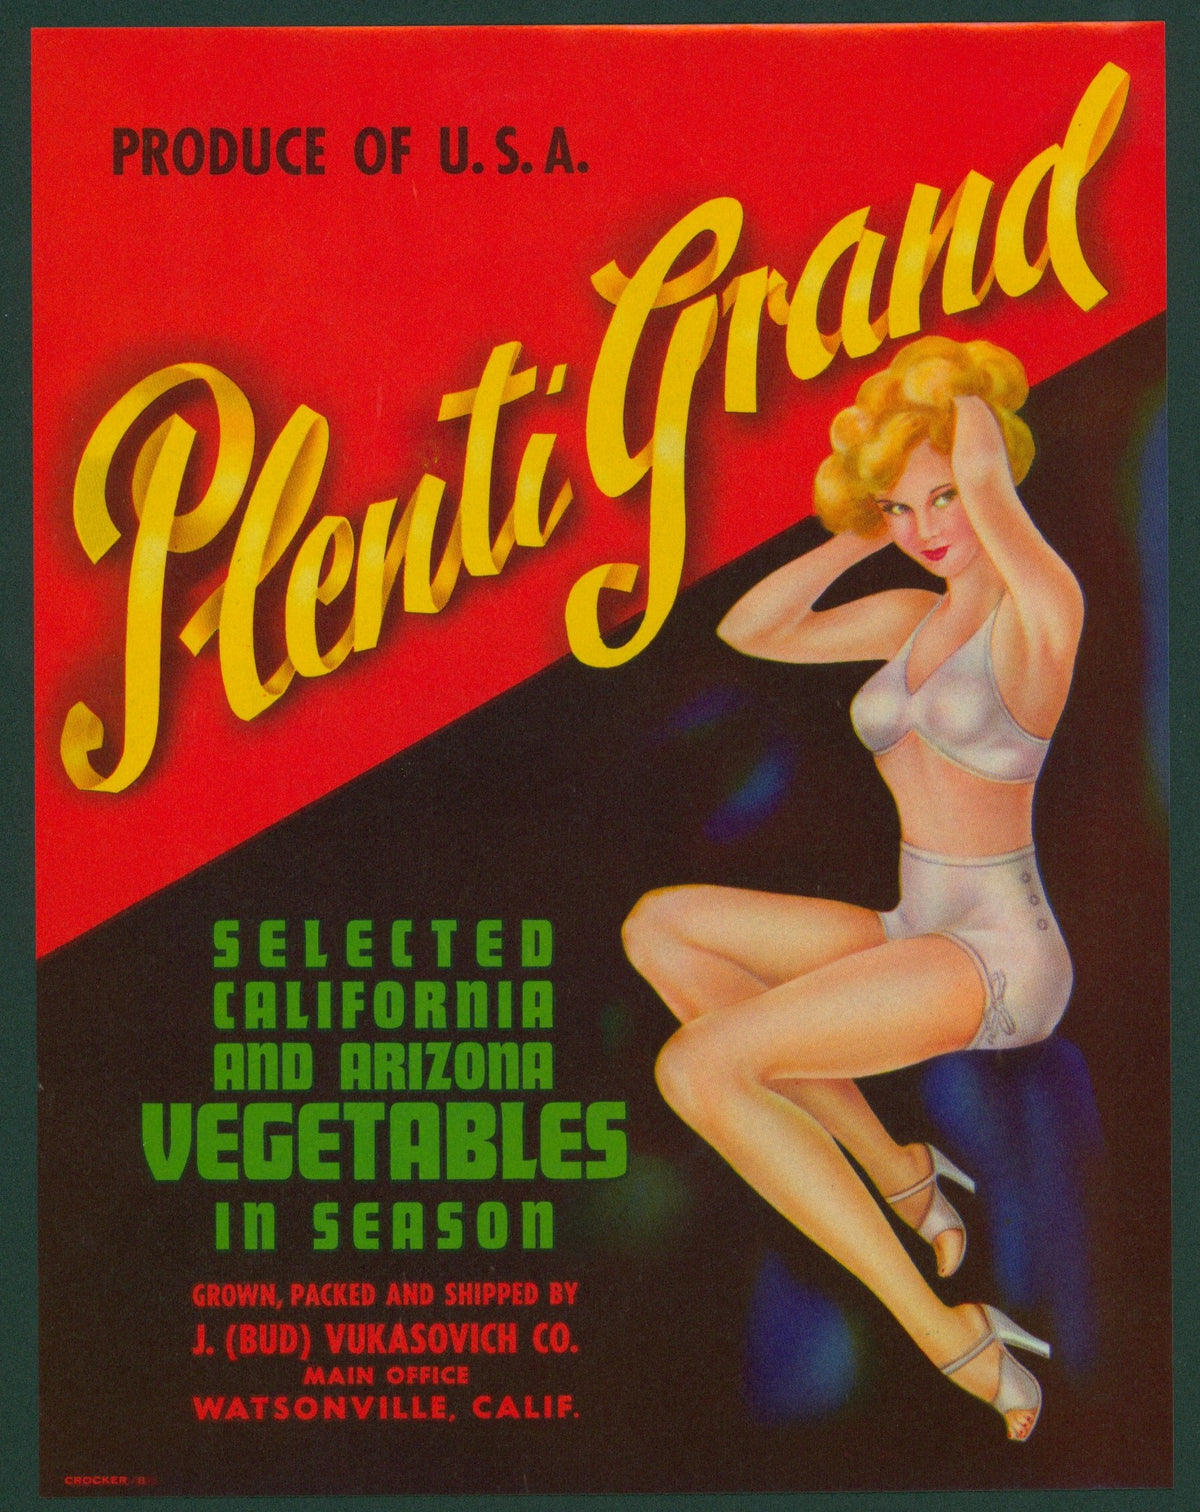 Plenti Grand Vegetables- Crate Label - Authentic Vintage Antique Print